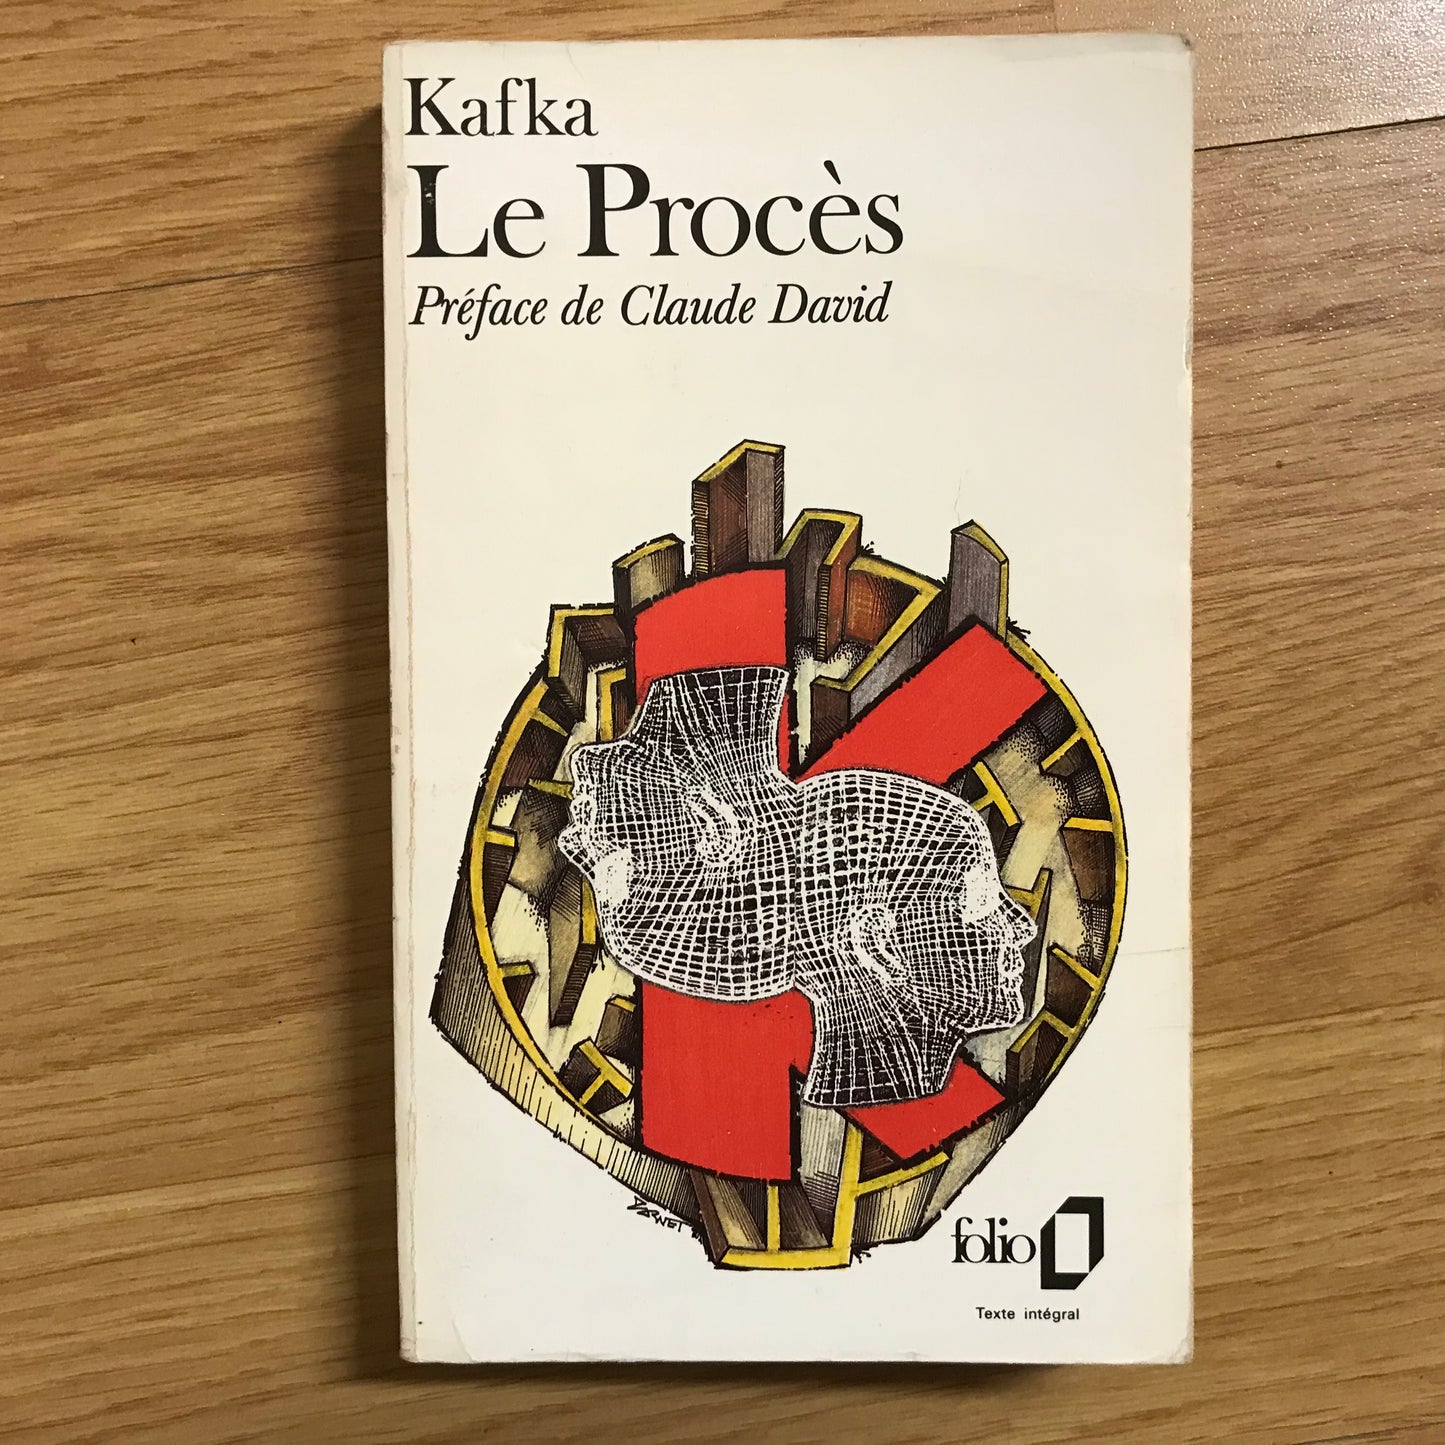 Kafka, Franz - Le procès